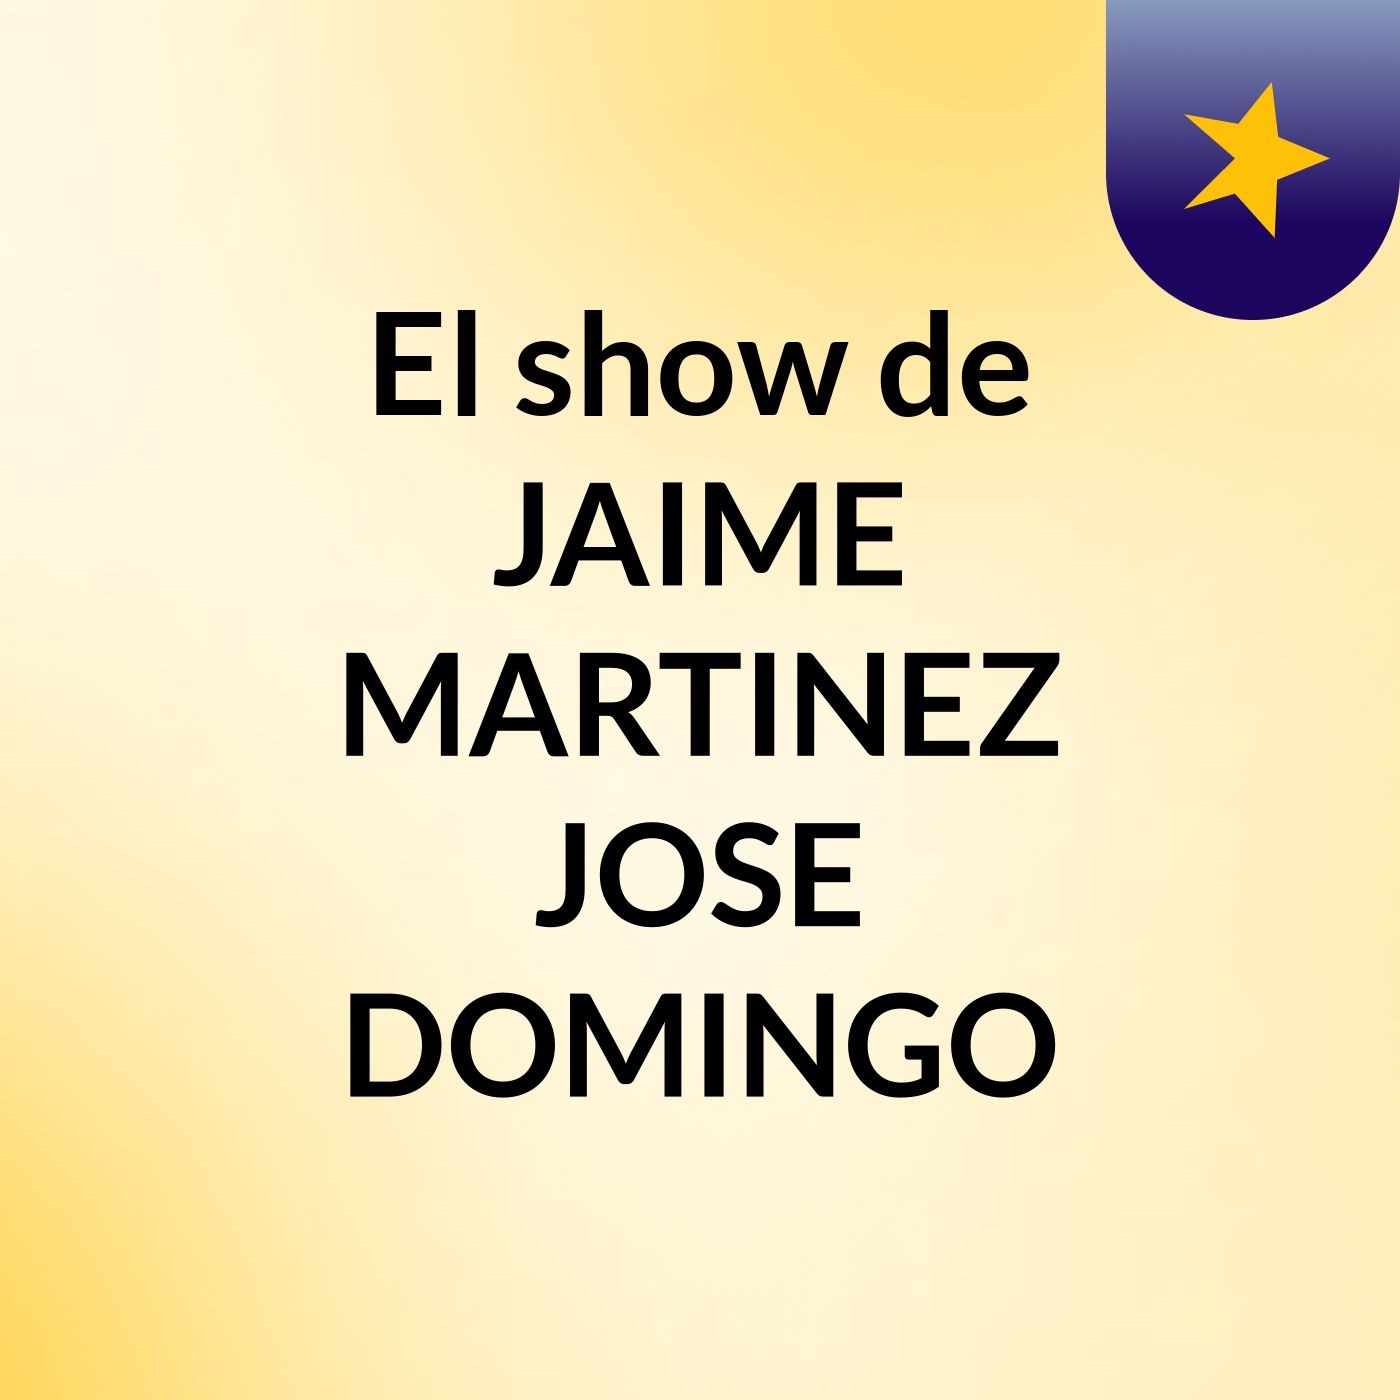 El show de JAIME MARTINEZ JOSE DOMINGO